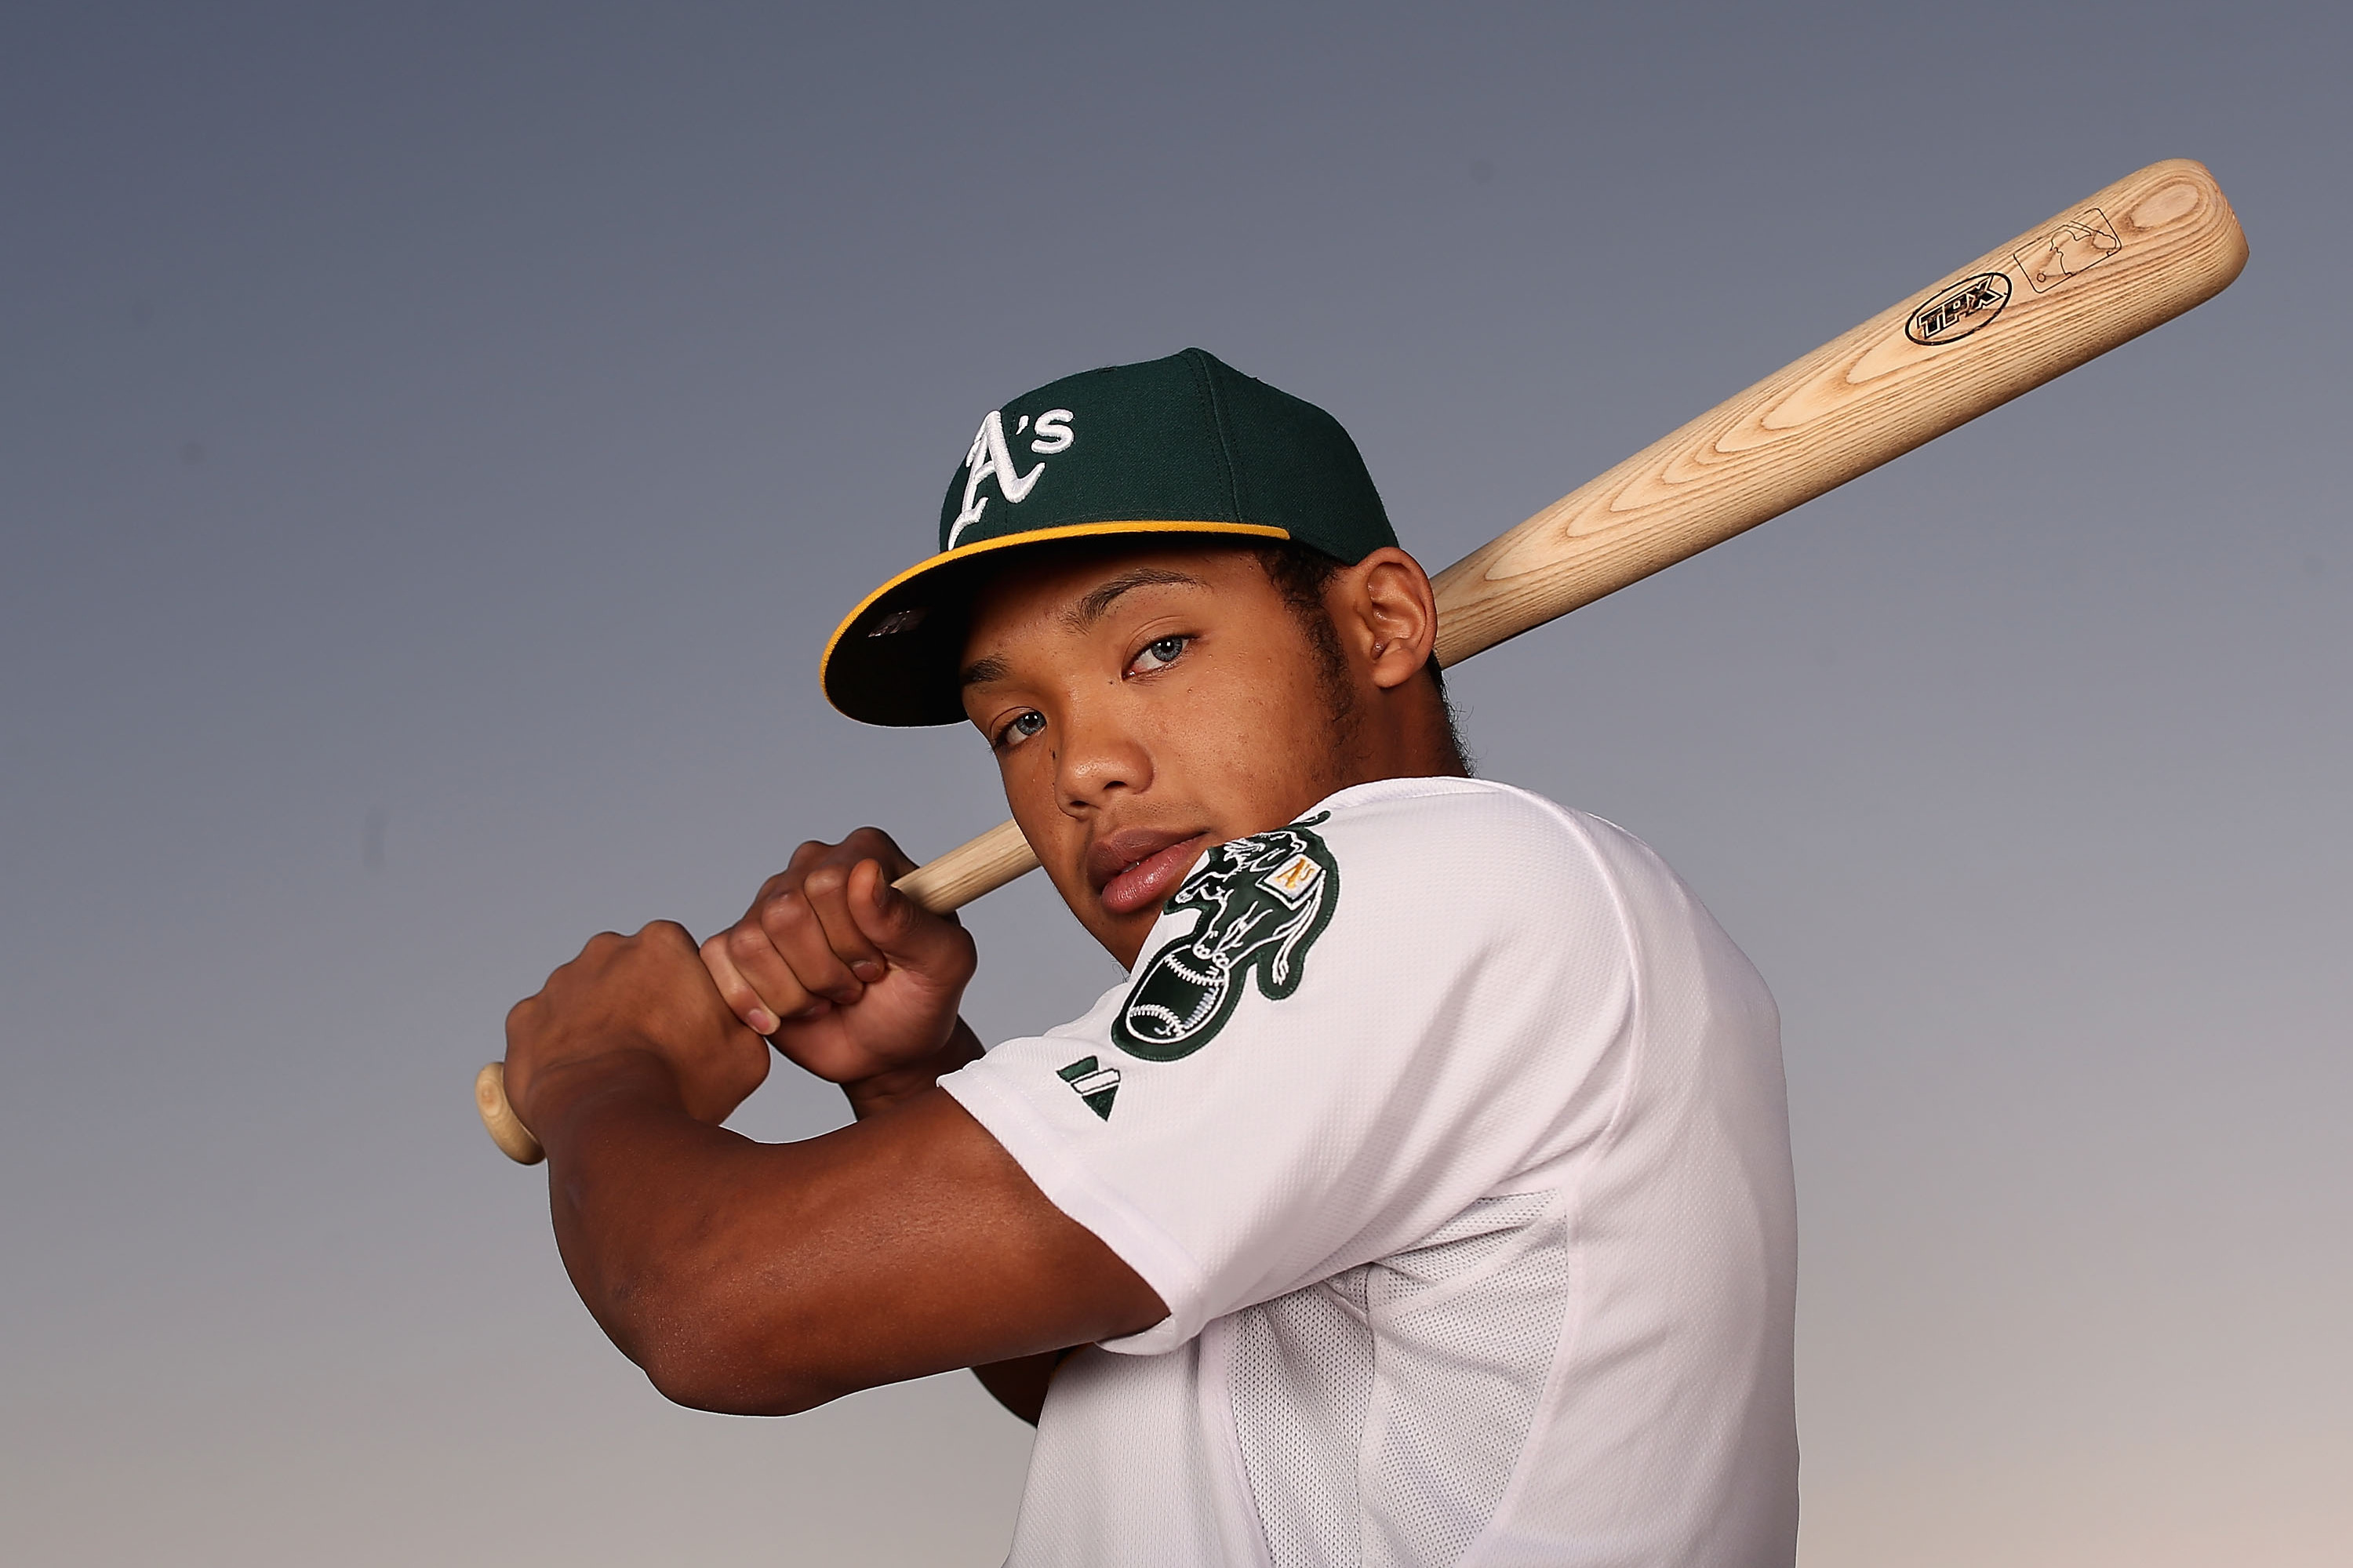 MLB Rookie Profile: Matt Olson, 1B, Oakland Athletics - Minor